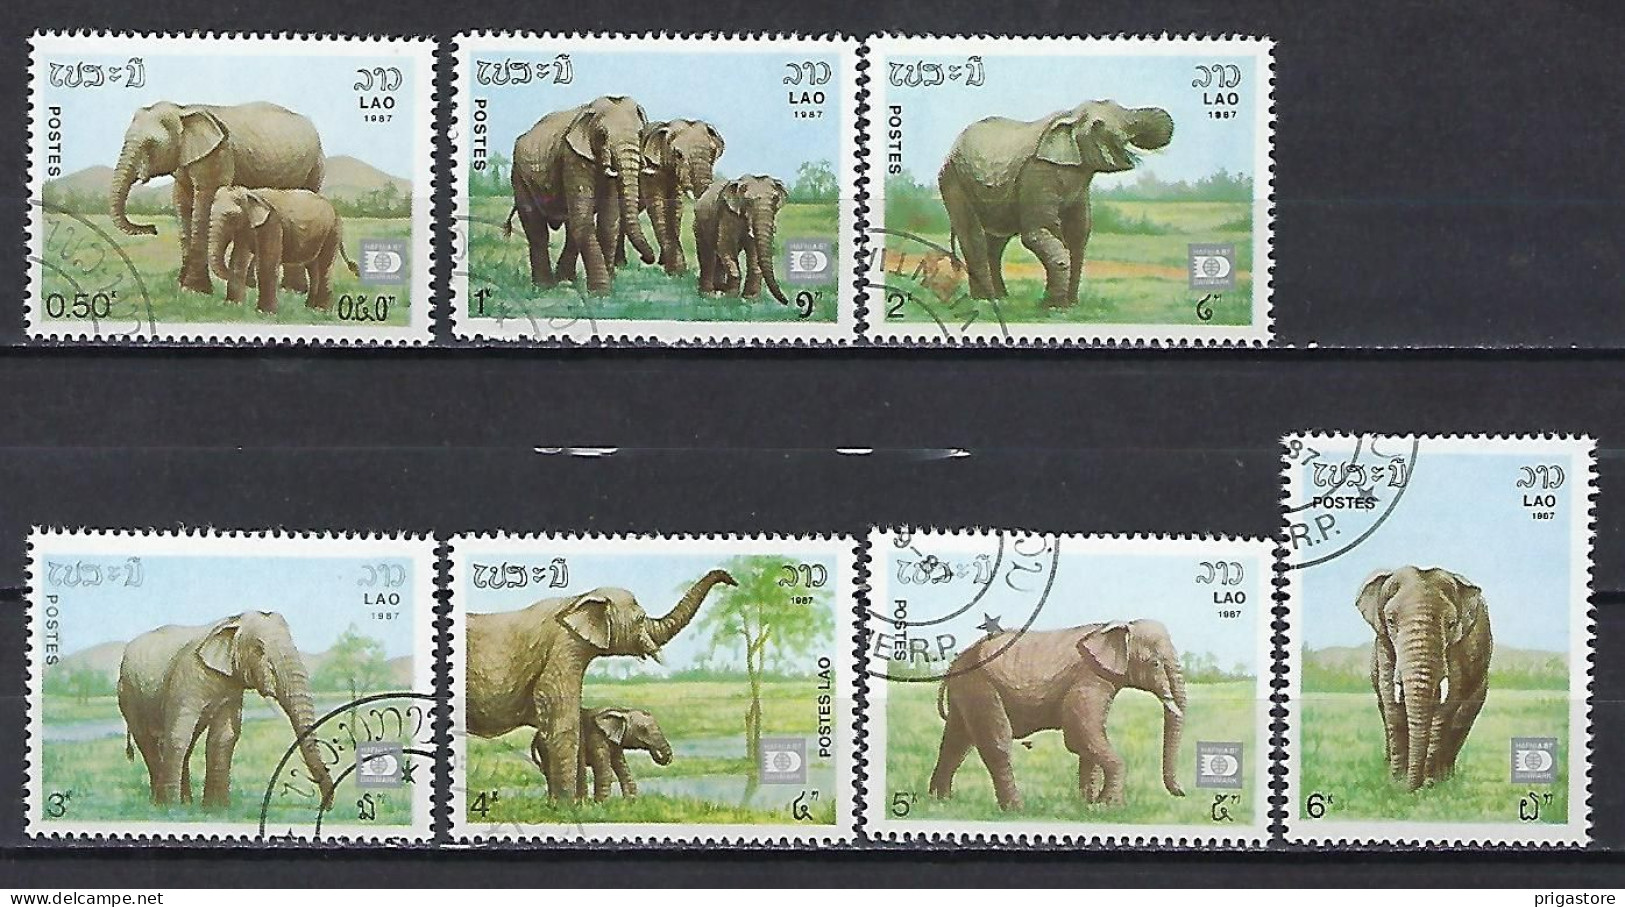 Eléphants Laos 1987 (605) Yvert 791 à 797 Oblitérés Used - Elefanti